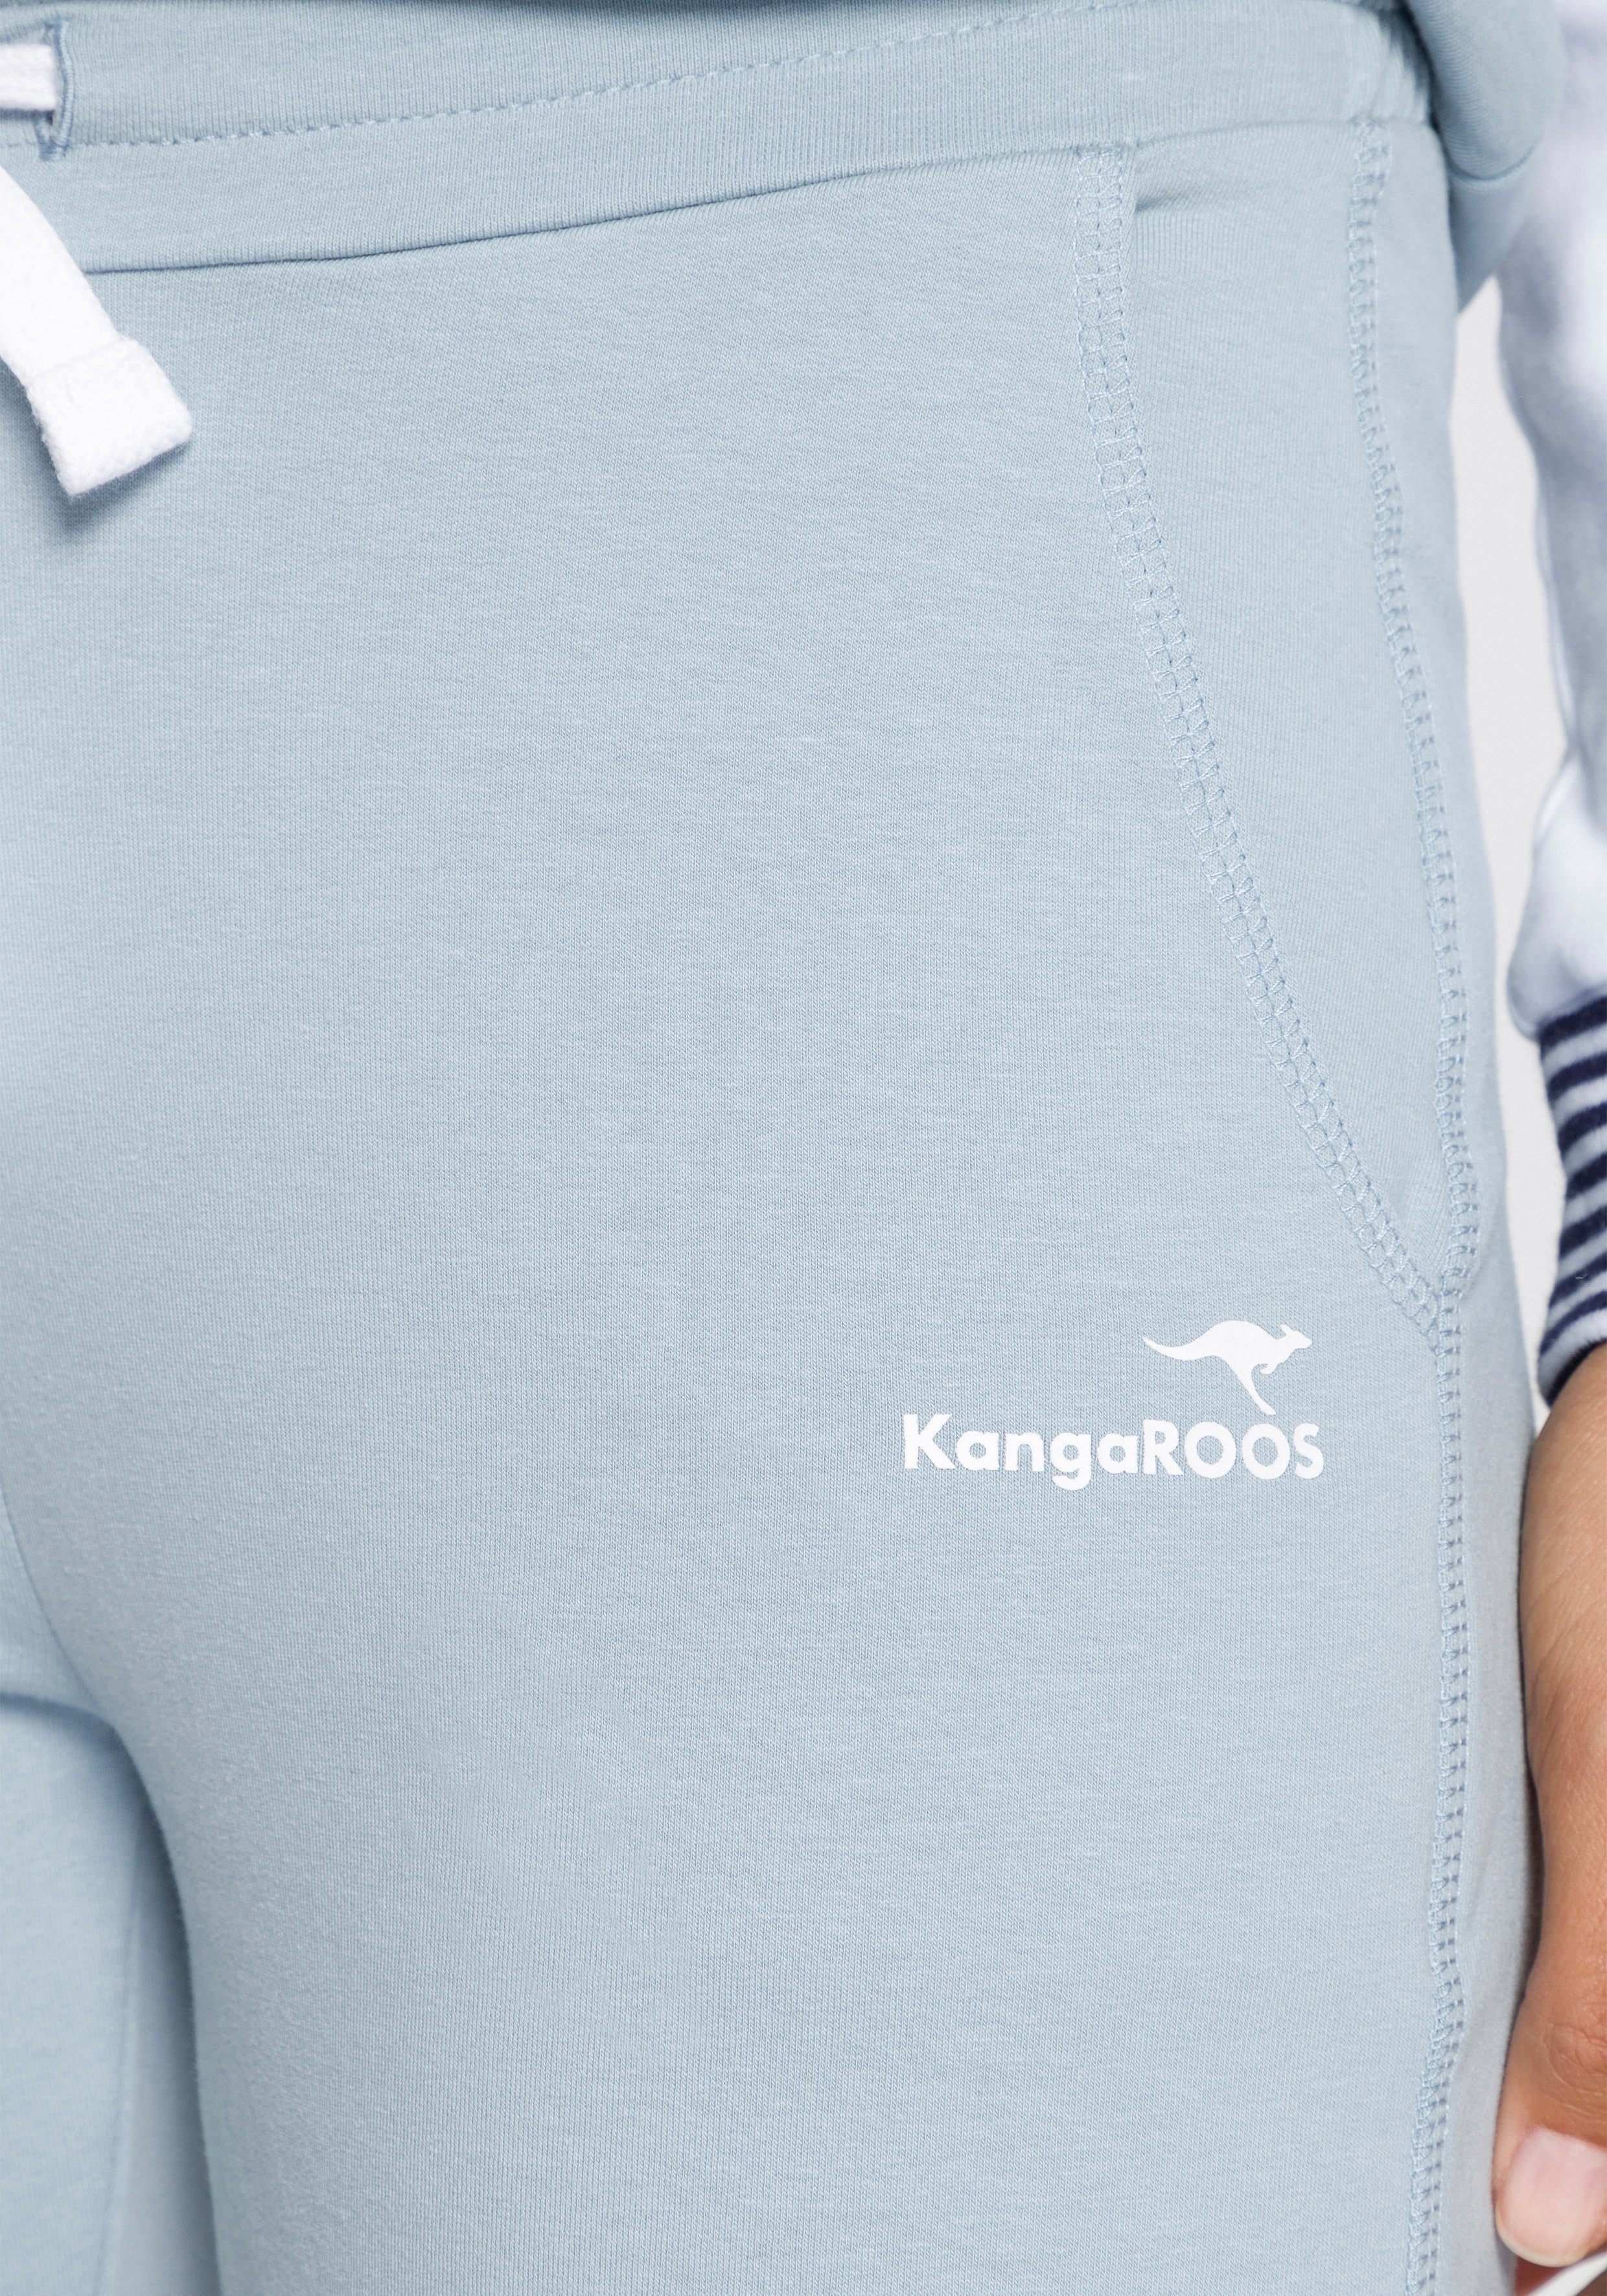 KangaROOS Jogginghose in graublau Logo-Druck mit 7/8-Länge